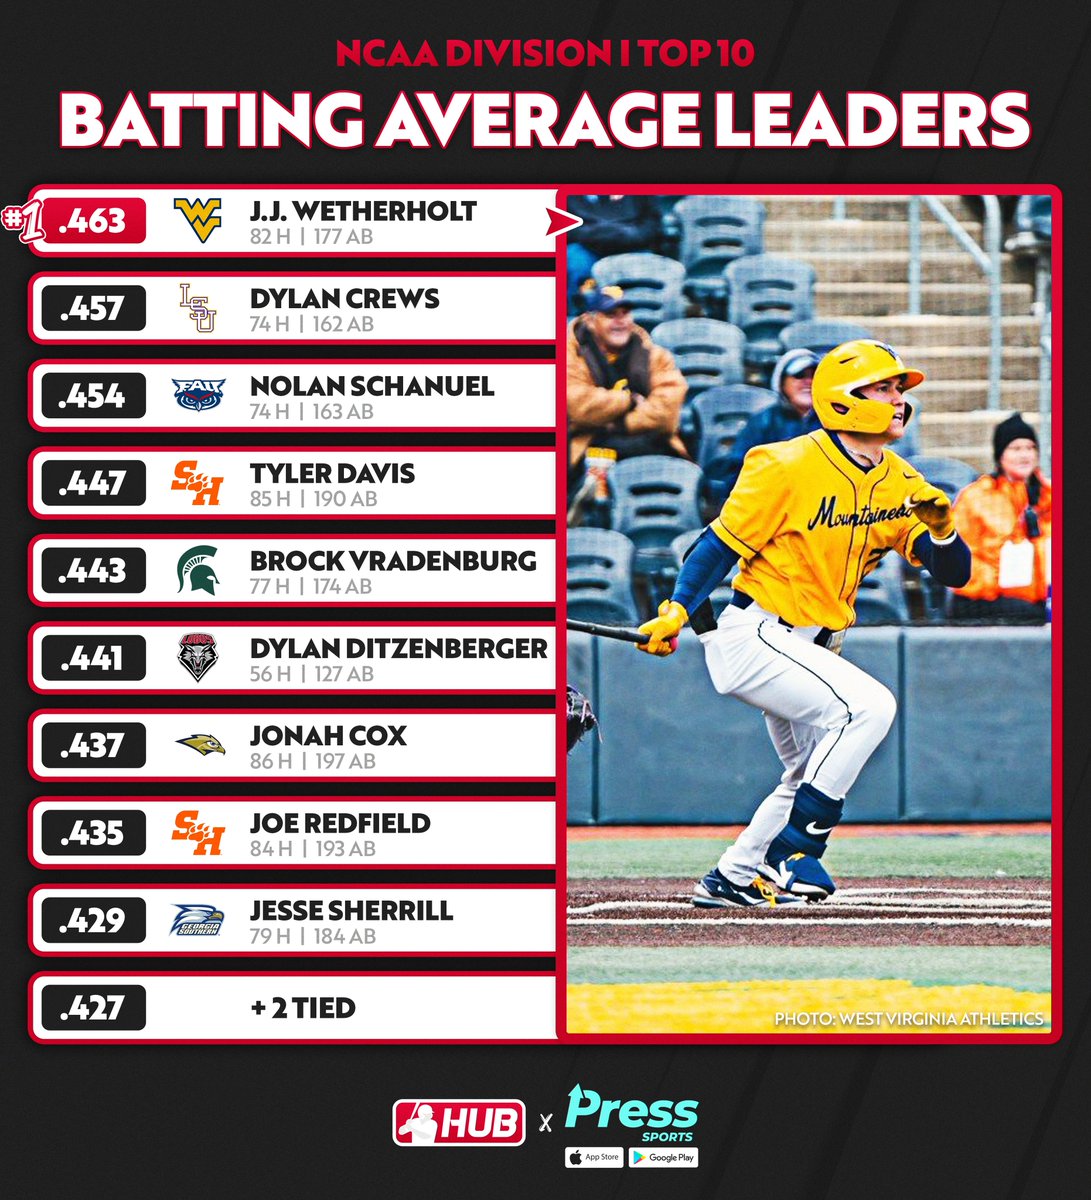 College Baseball Hub on Twitter "D1 batting average leaders through